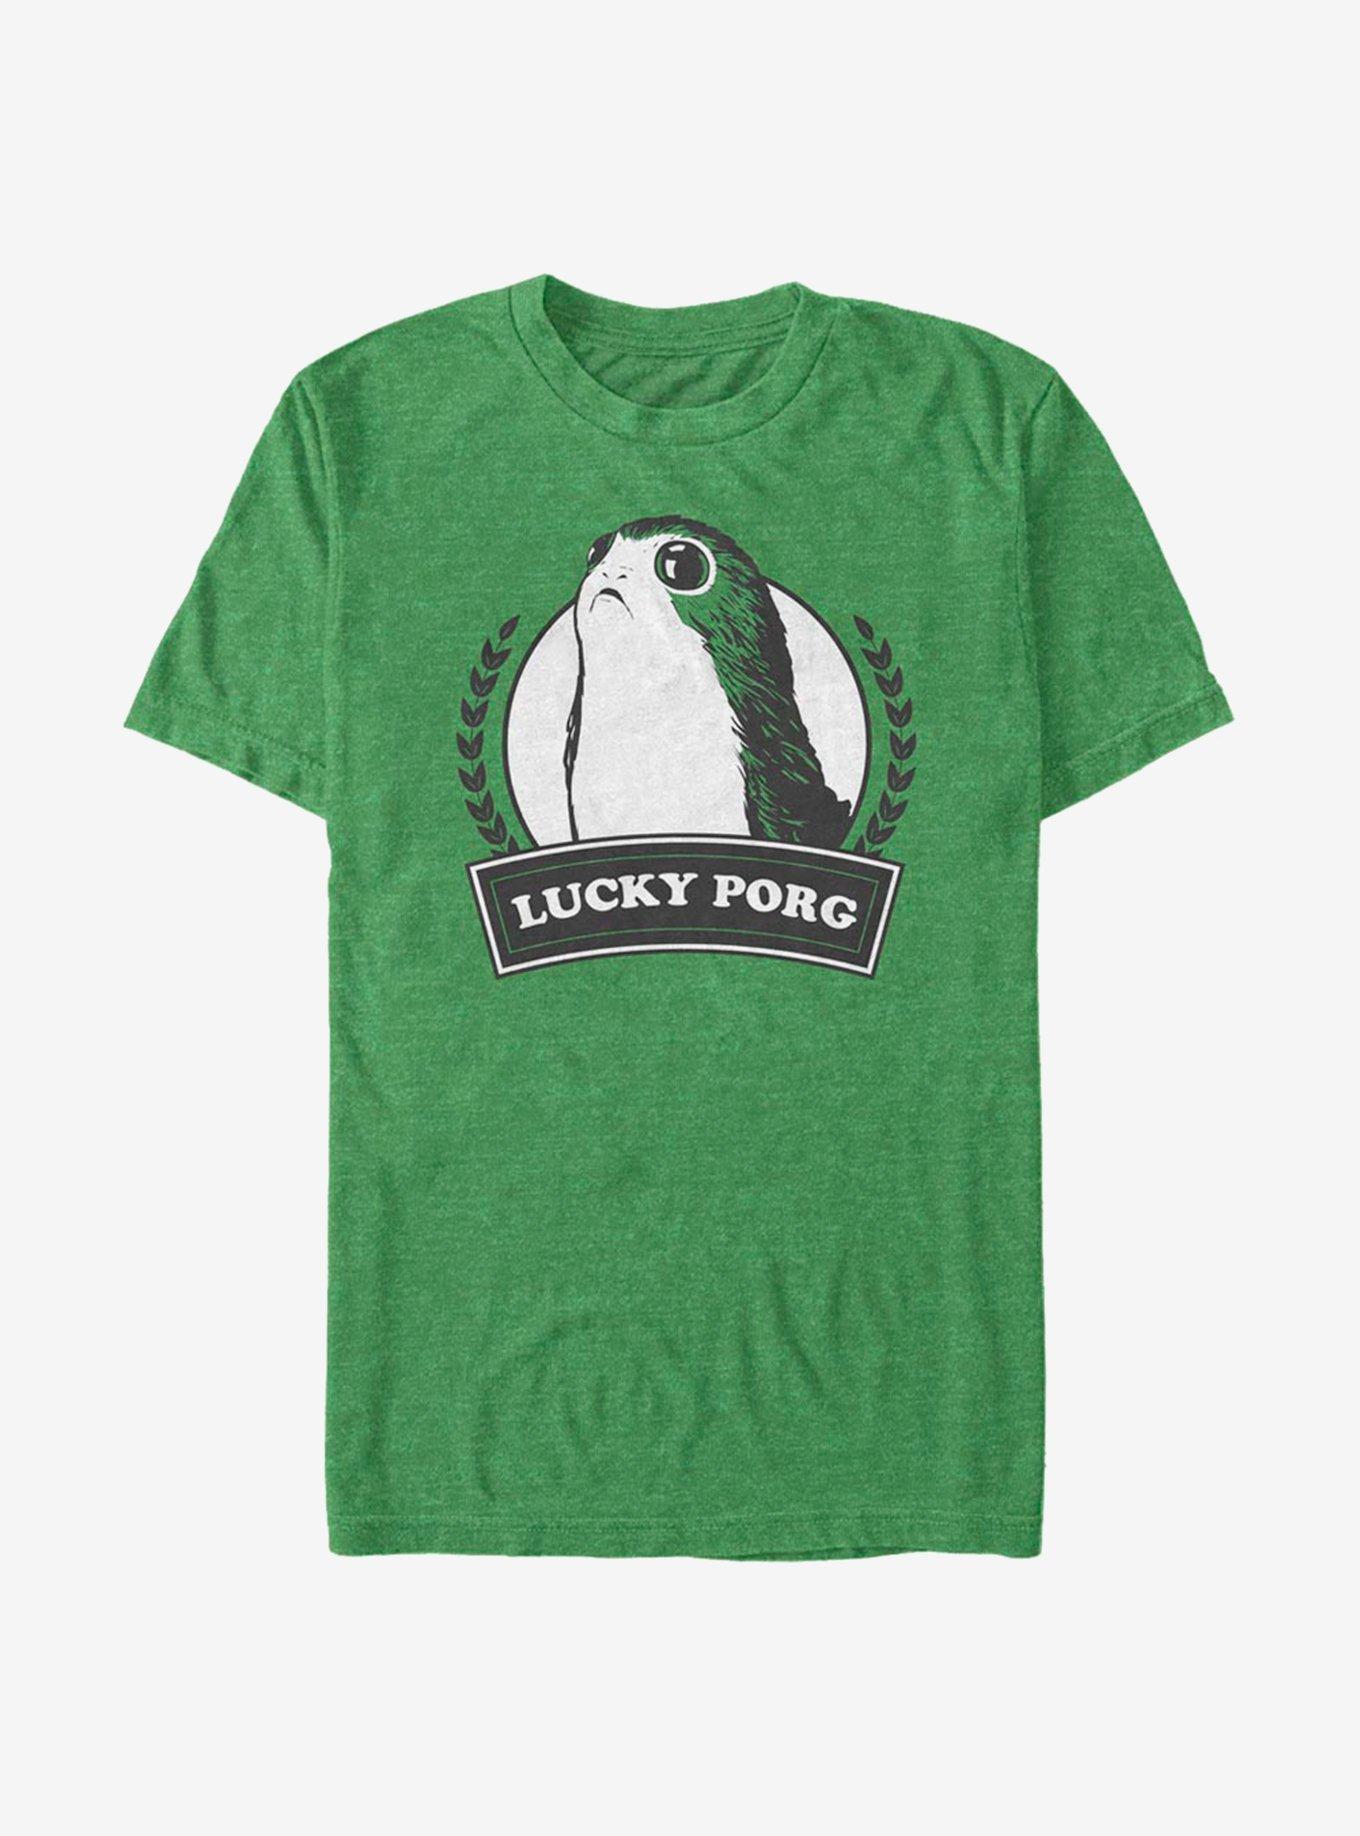 Star Wars Eipisode VIII The Last Jedi Lucky Porg T-Shirt